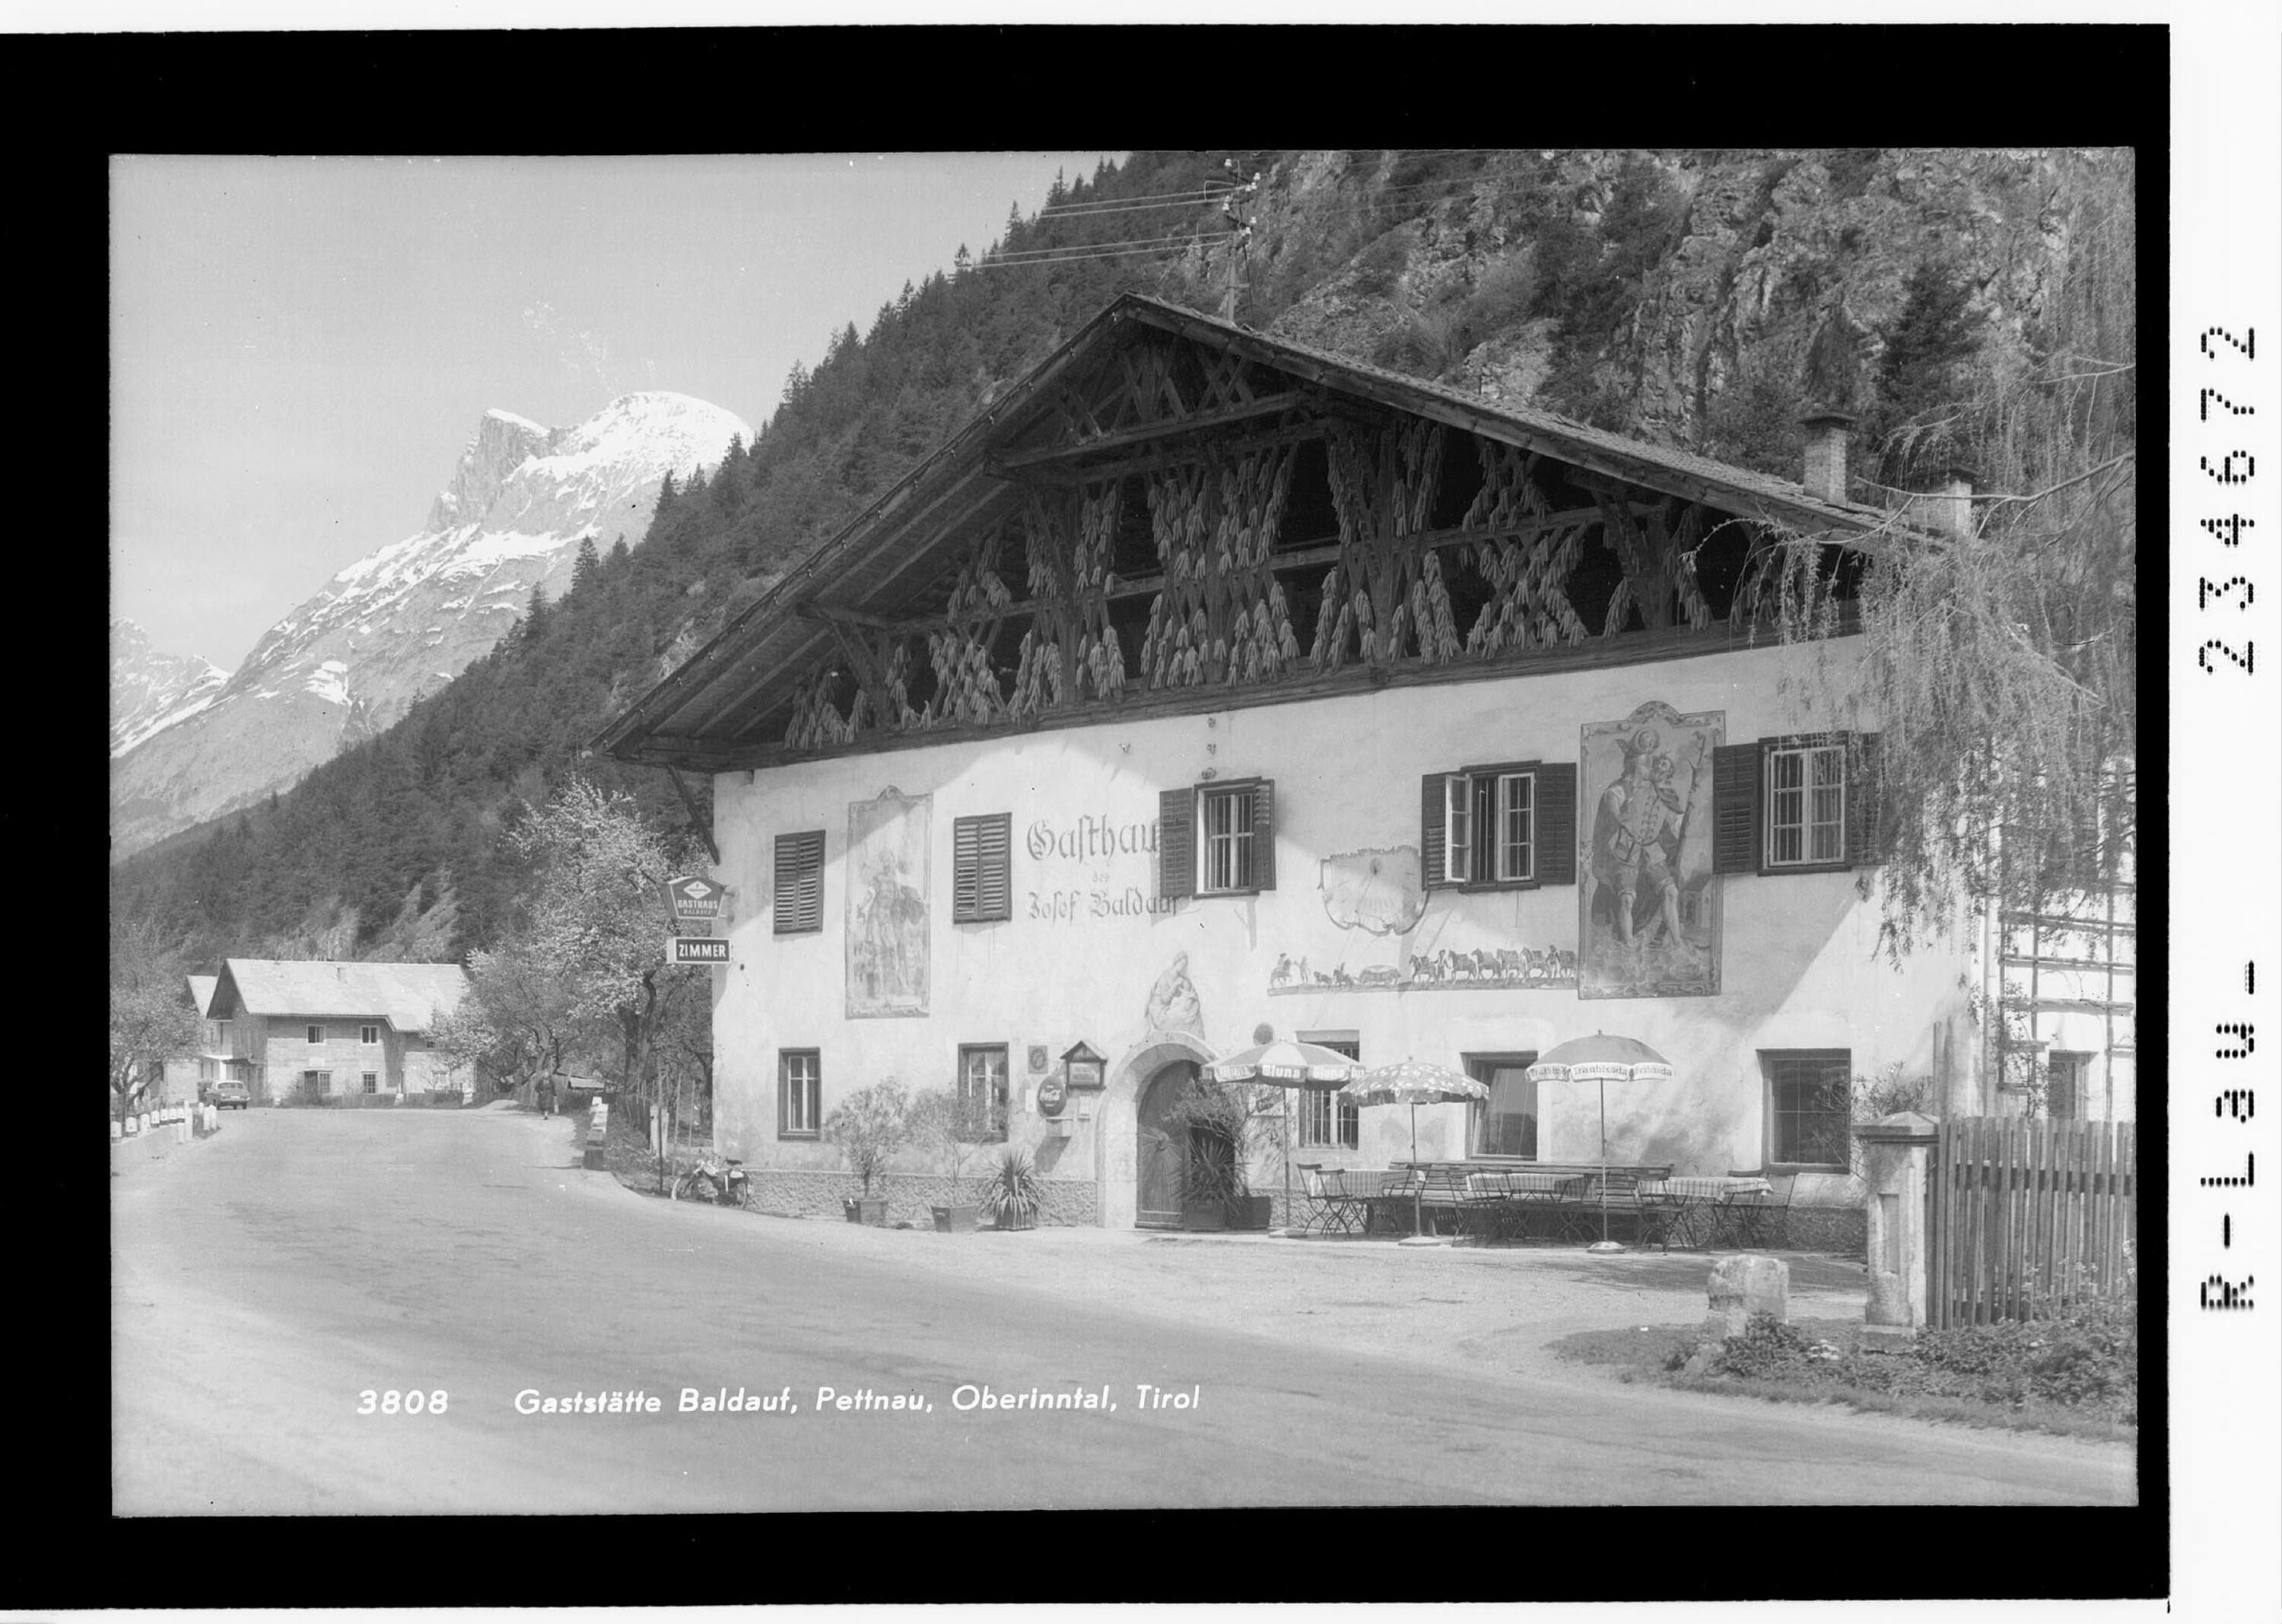 Gaststätte Baldauf, Pettnau, Oberinntal, Tirol></div>


    <hr>
    <div class=